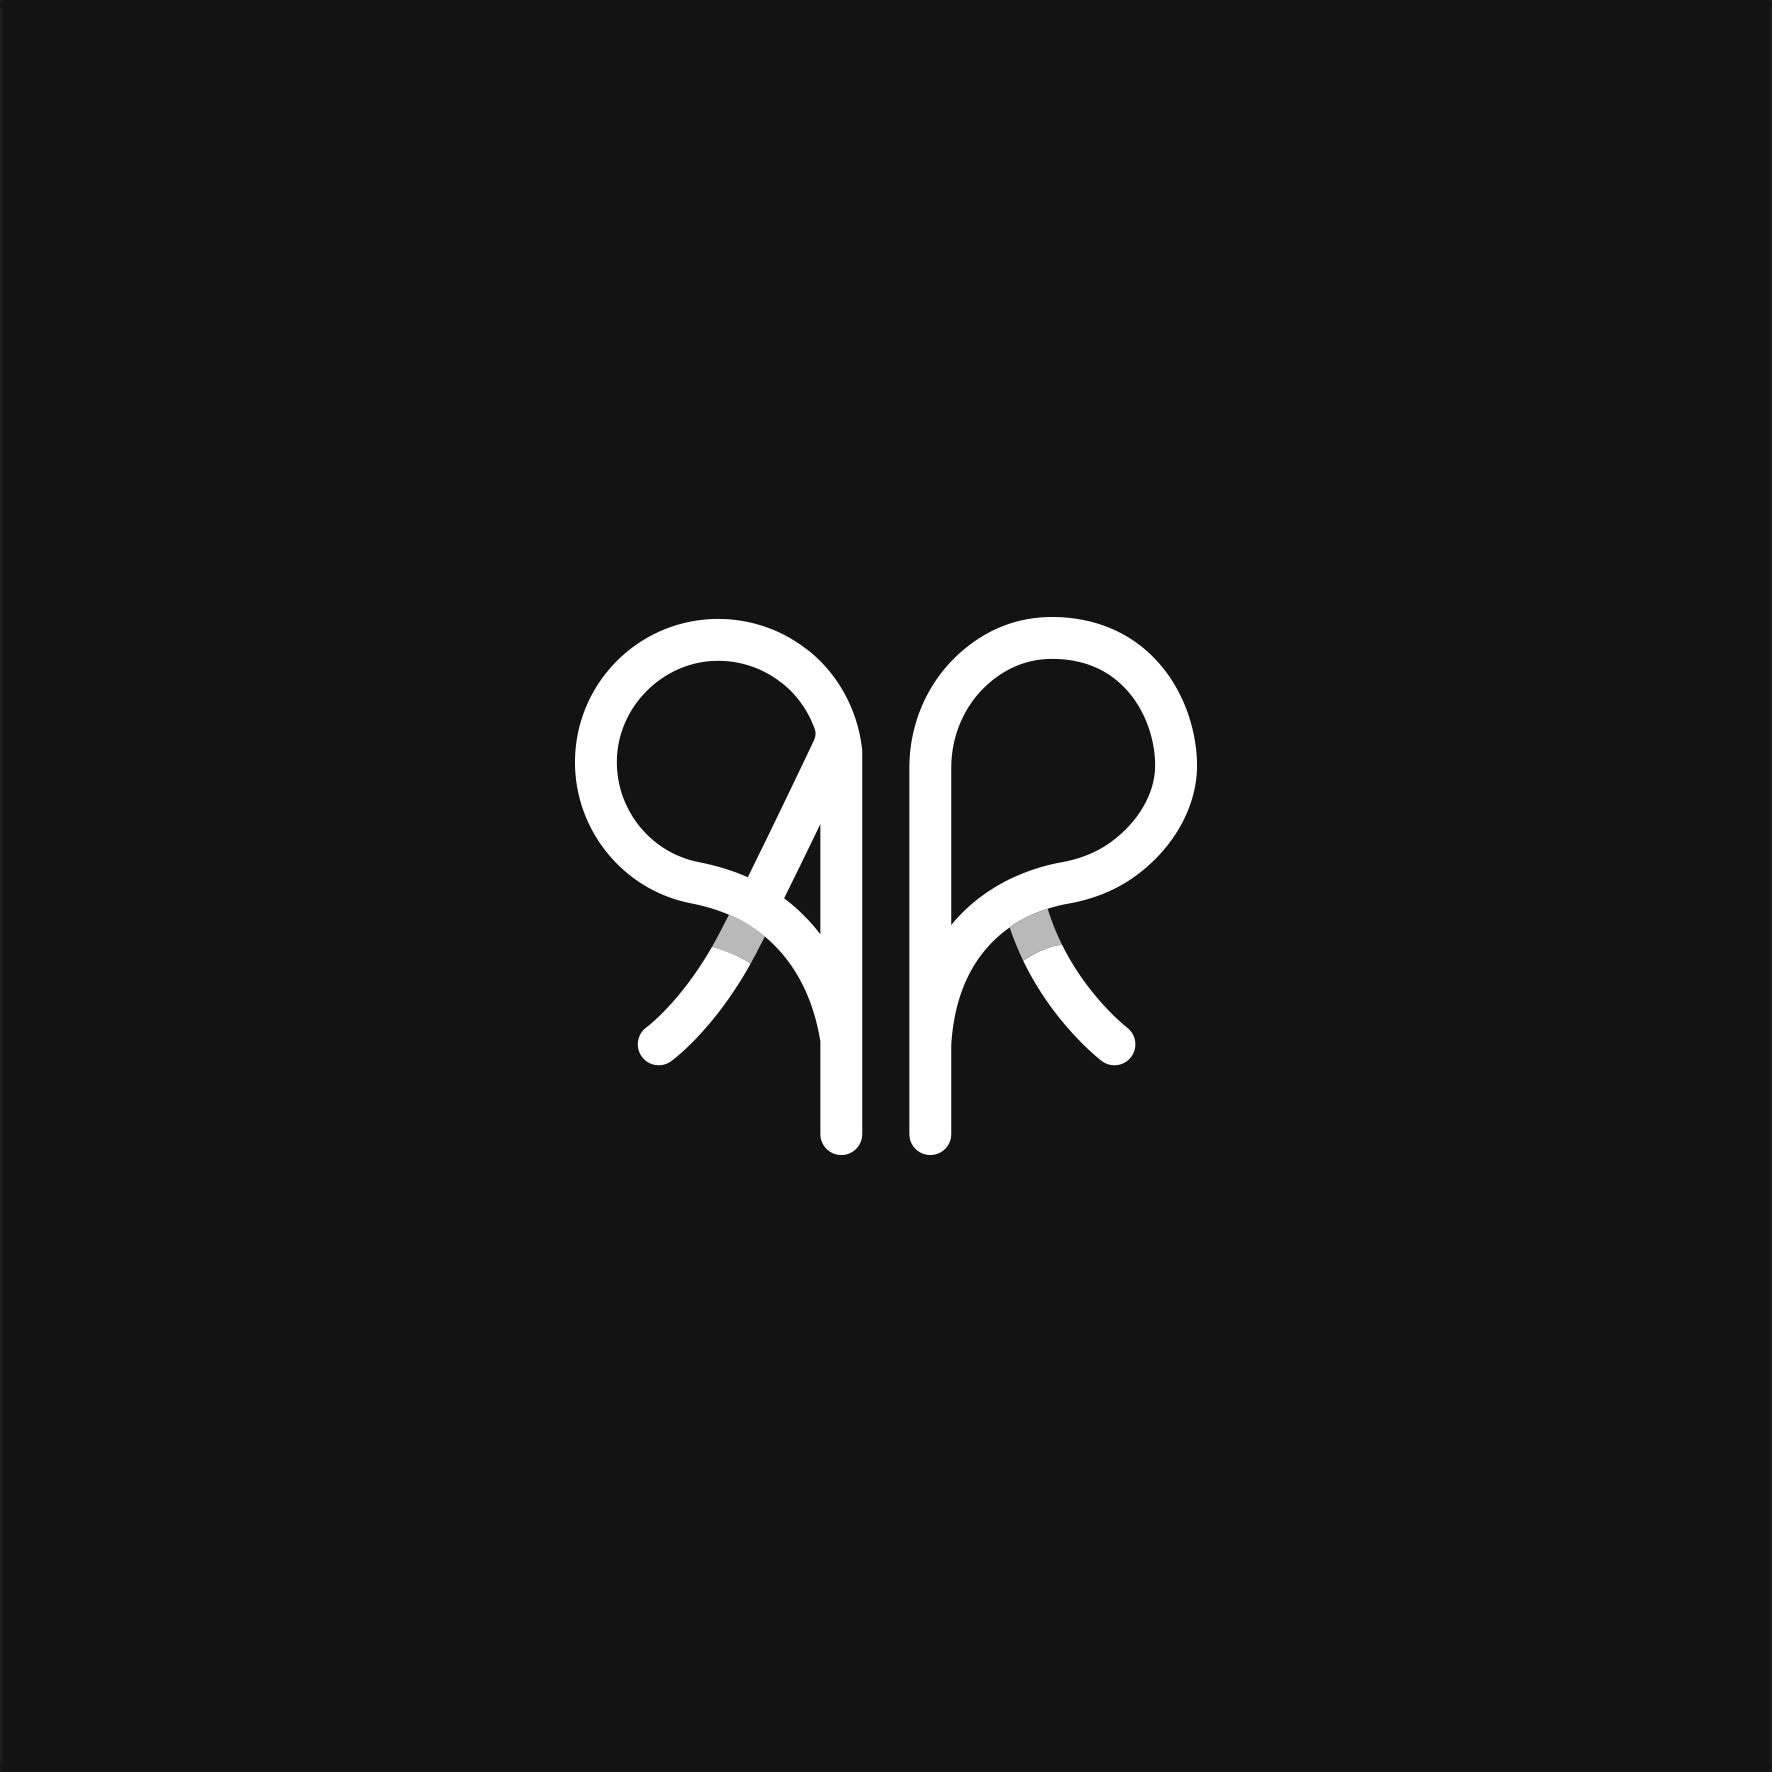 Romantic Logo - AR logo, Monogram Logo, Heart shape logo, Love logo, Romantic logo ...